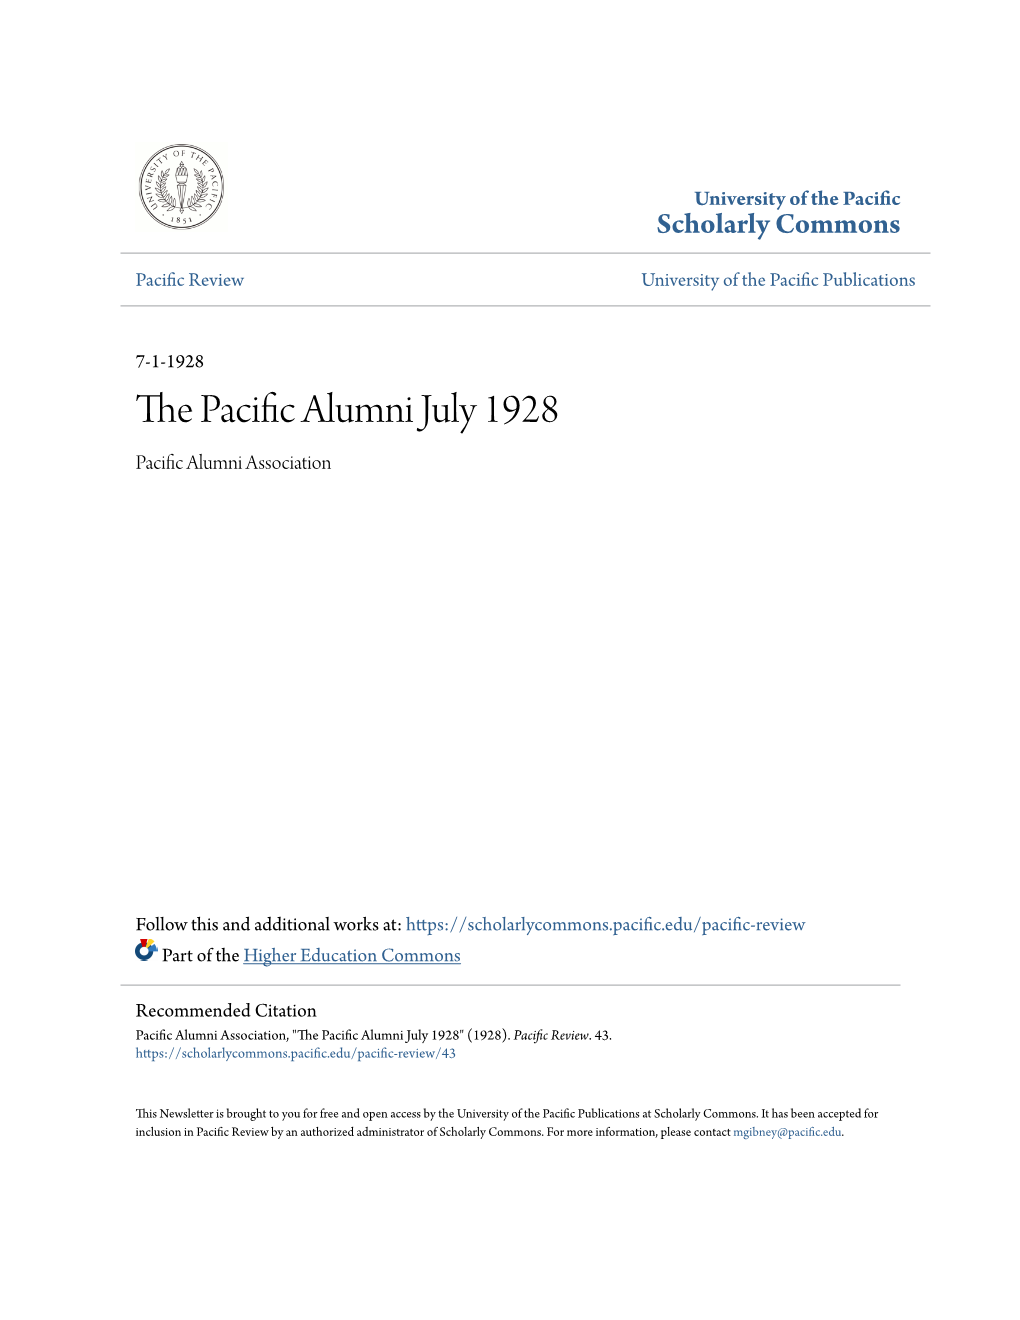 The Pacific Alumni July 1928